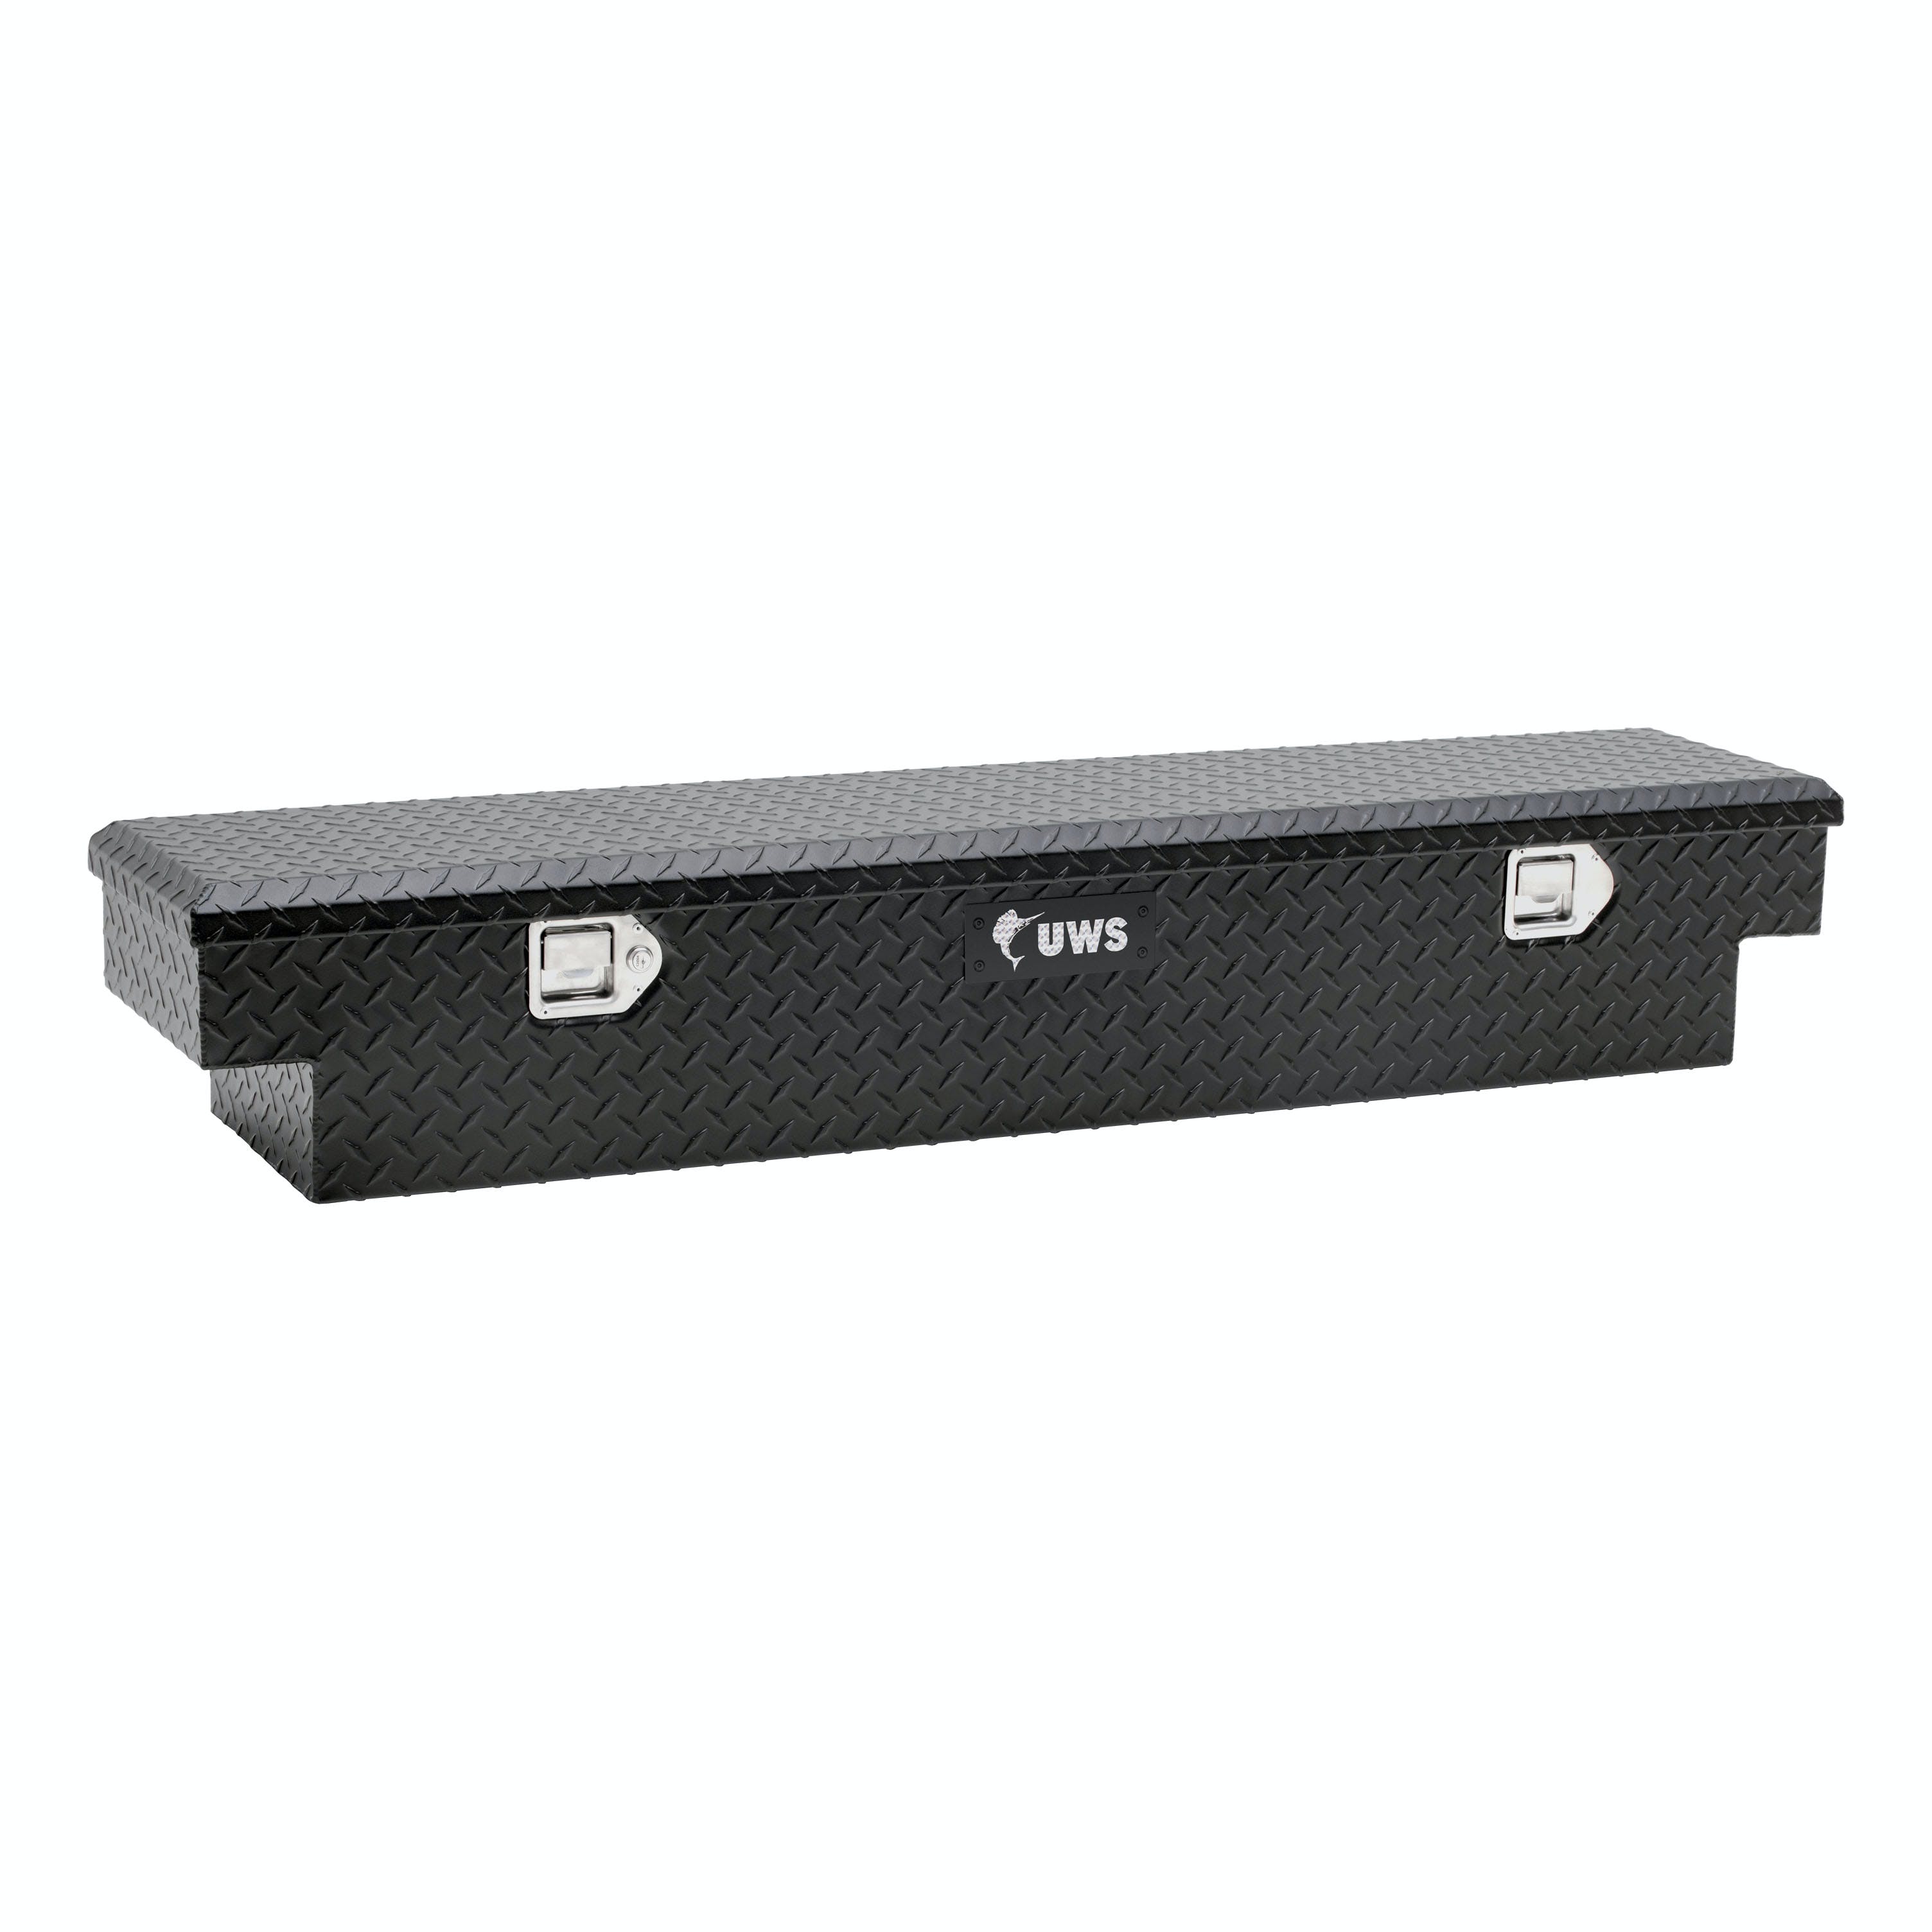 UWS 8500005 UTV Tool Box, Single Lid with Paddle Handle Latch